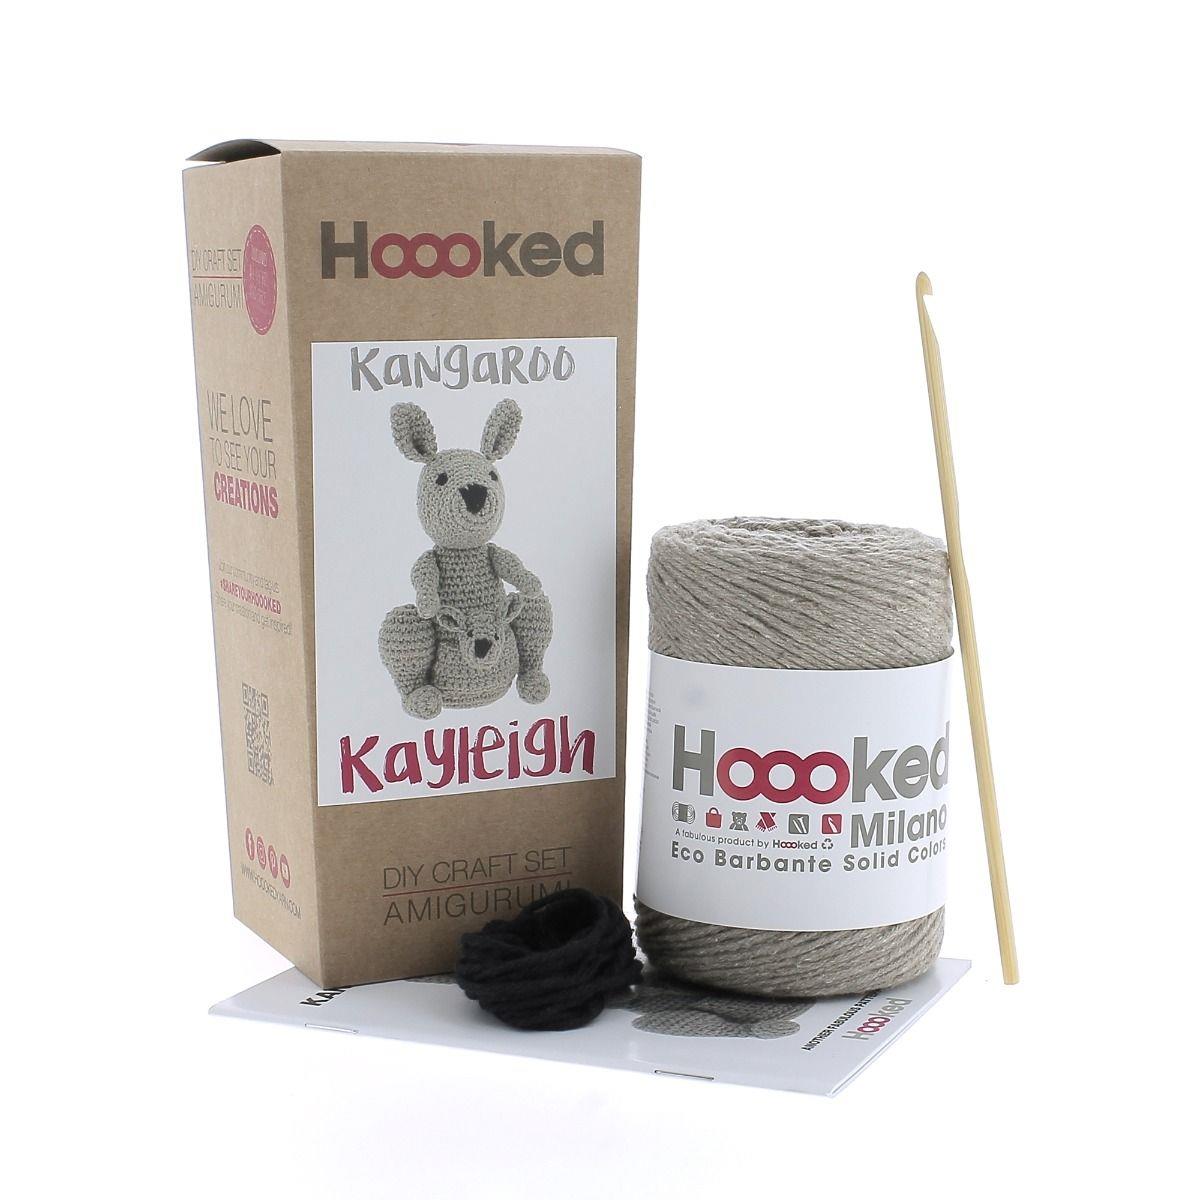 [Hoooked] PAK236 Eco Barbante Milano Taupe Cotton Kangaroo Kayleigh Crochet Amigurumi Kit